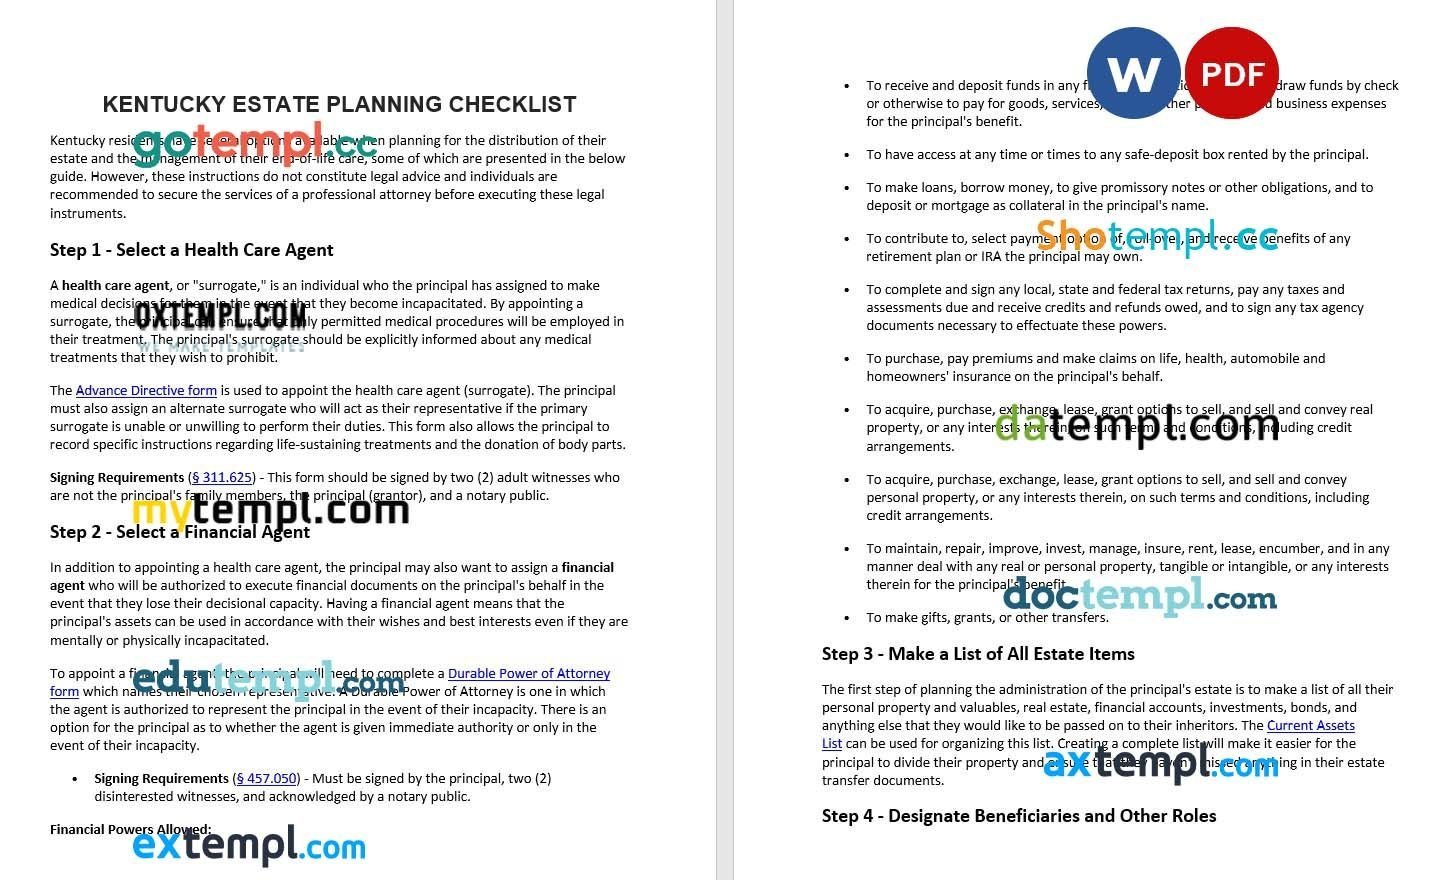 Kentucky Estate Planning Checklist example, fully editable